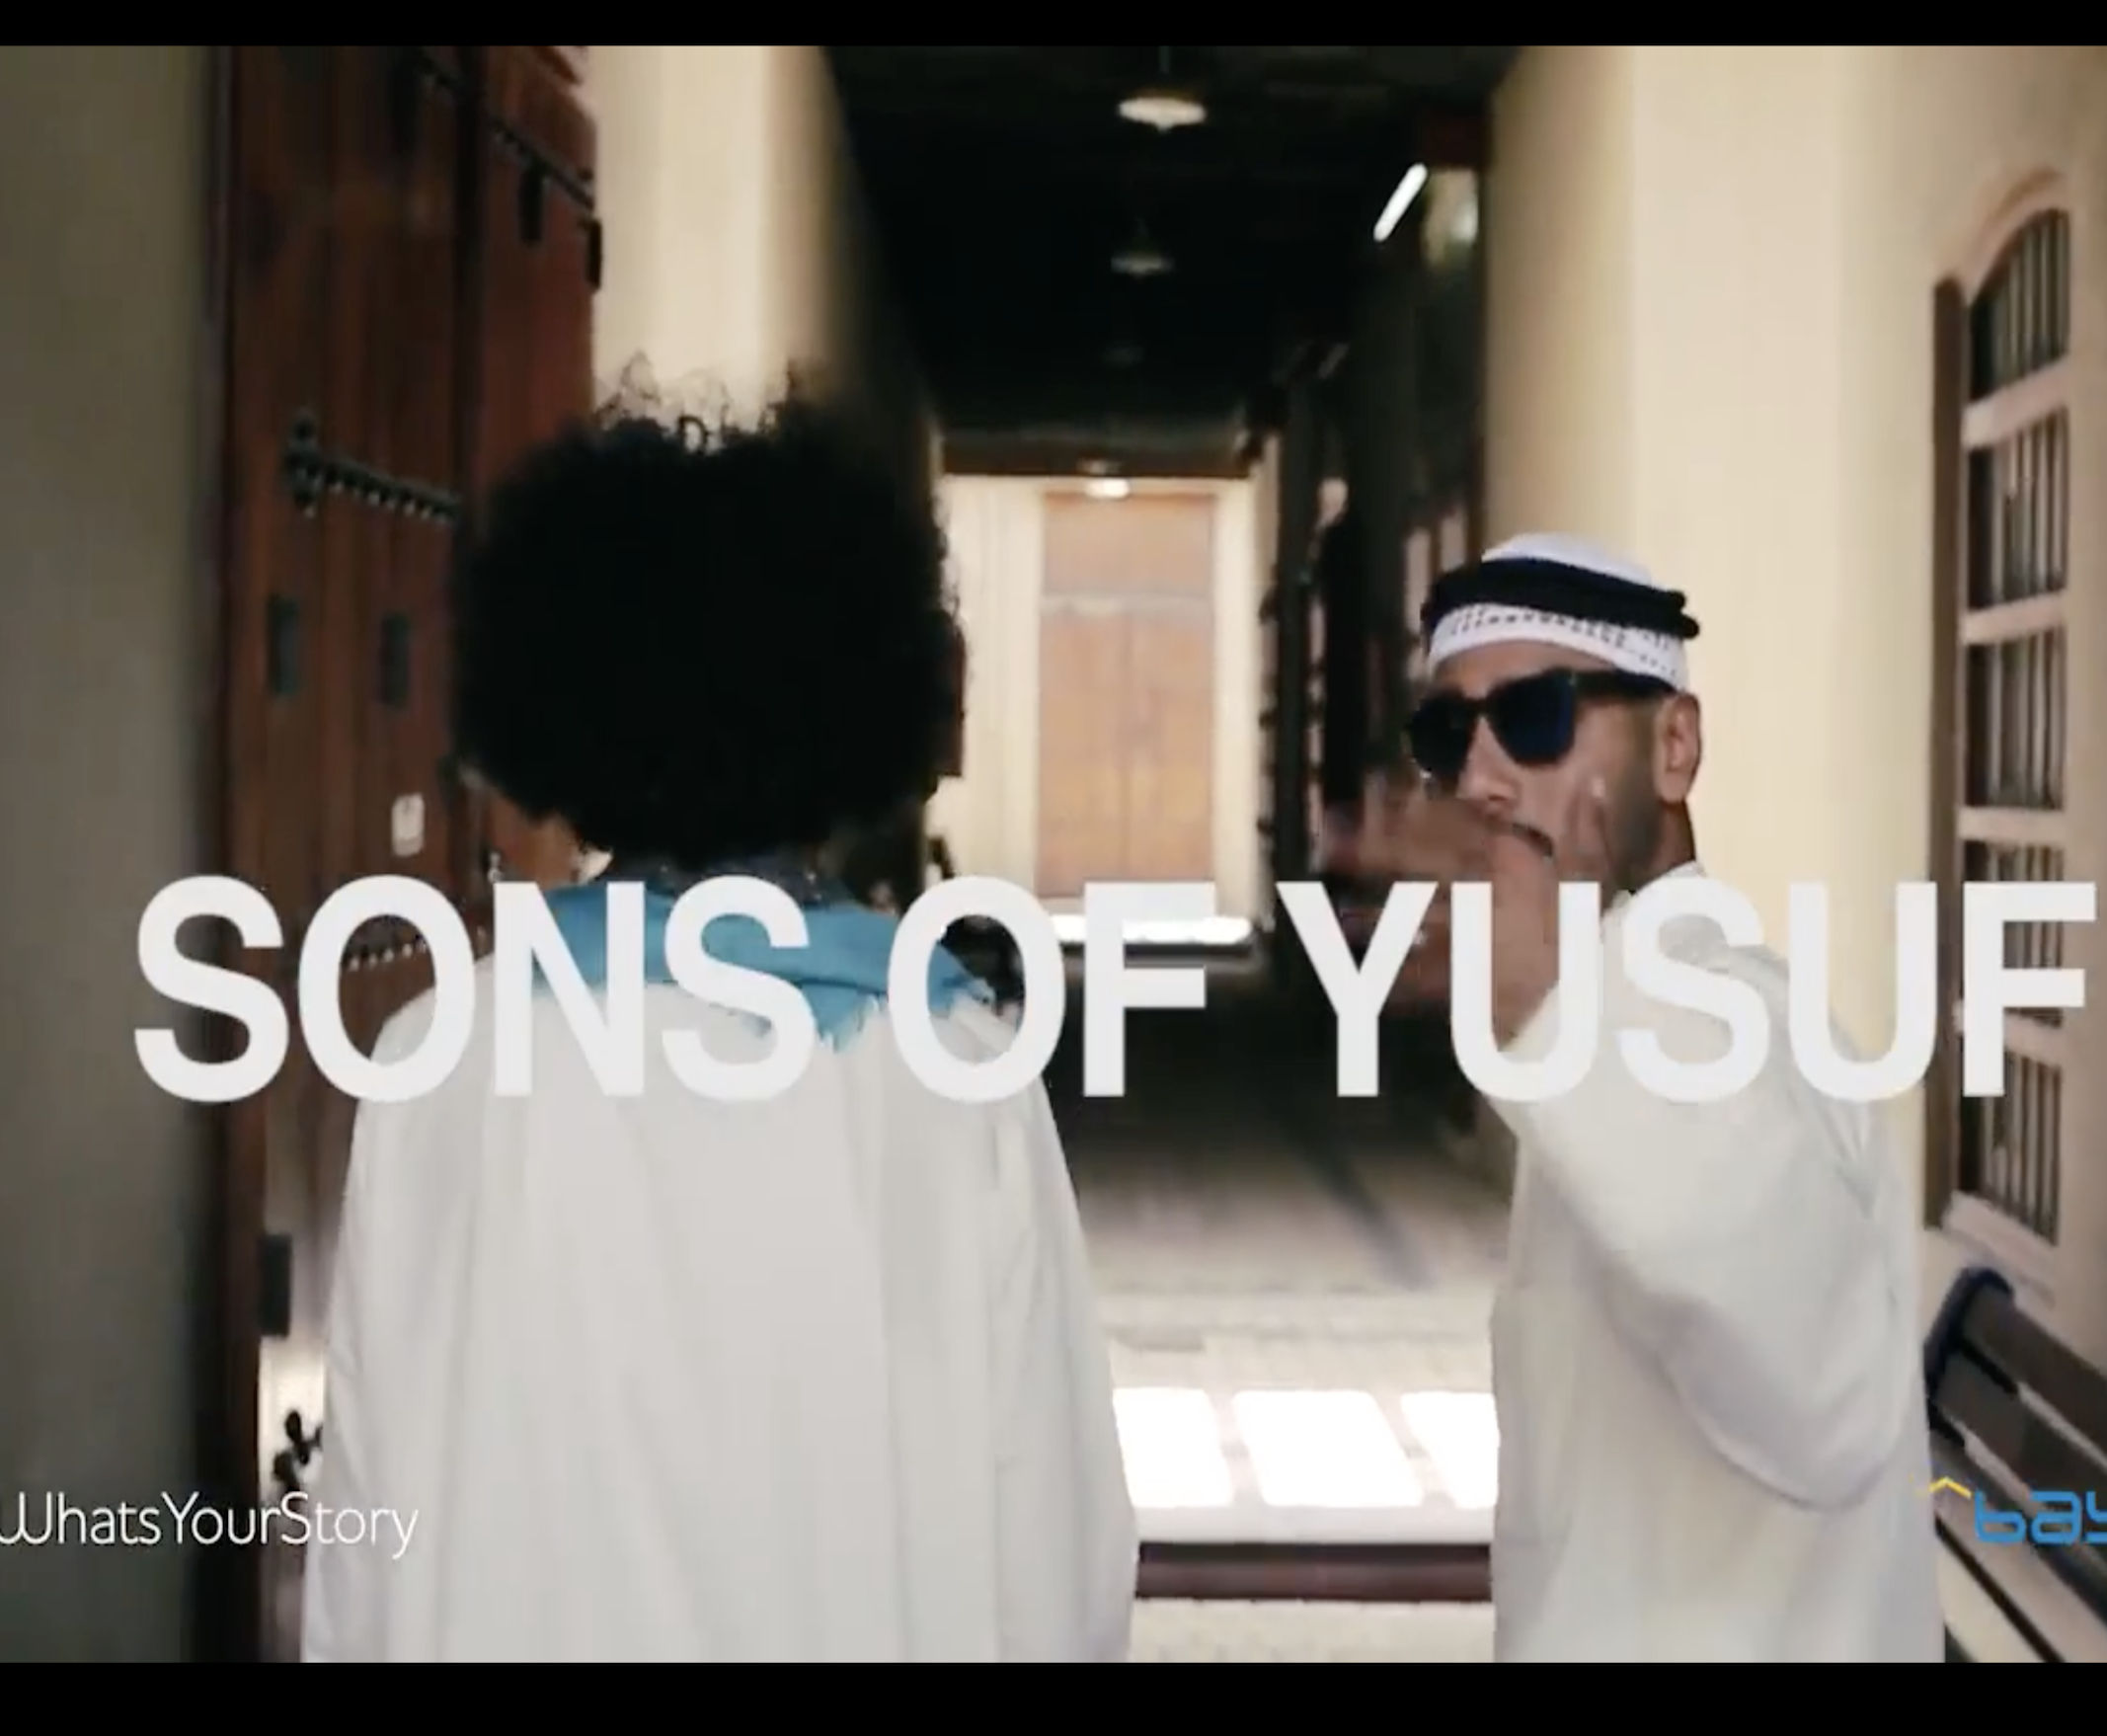 Sons of Yusuf